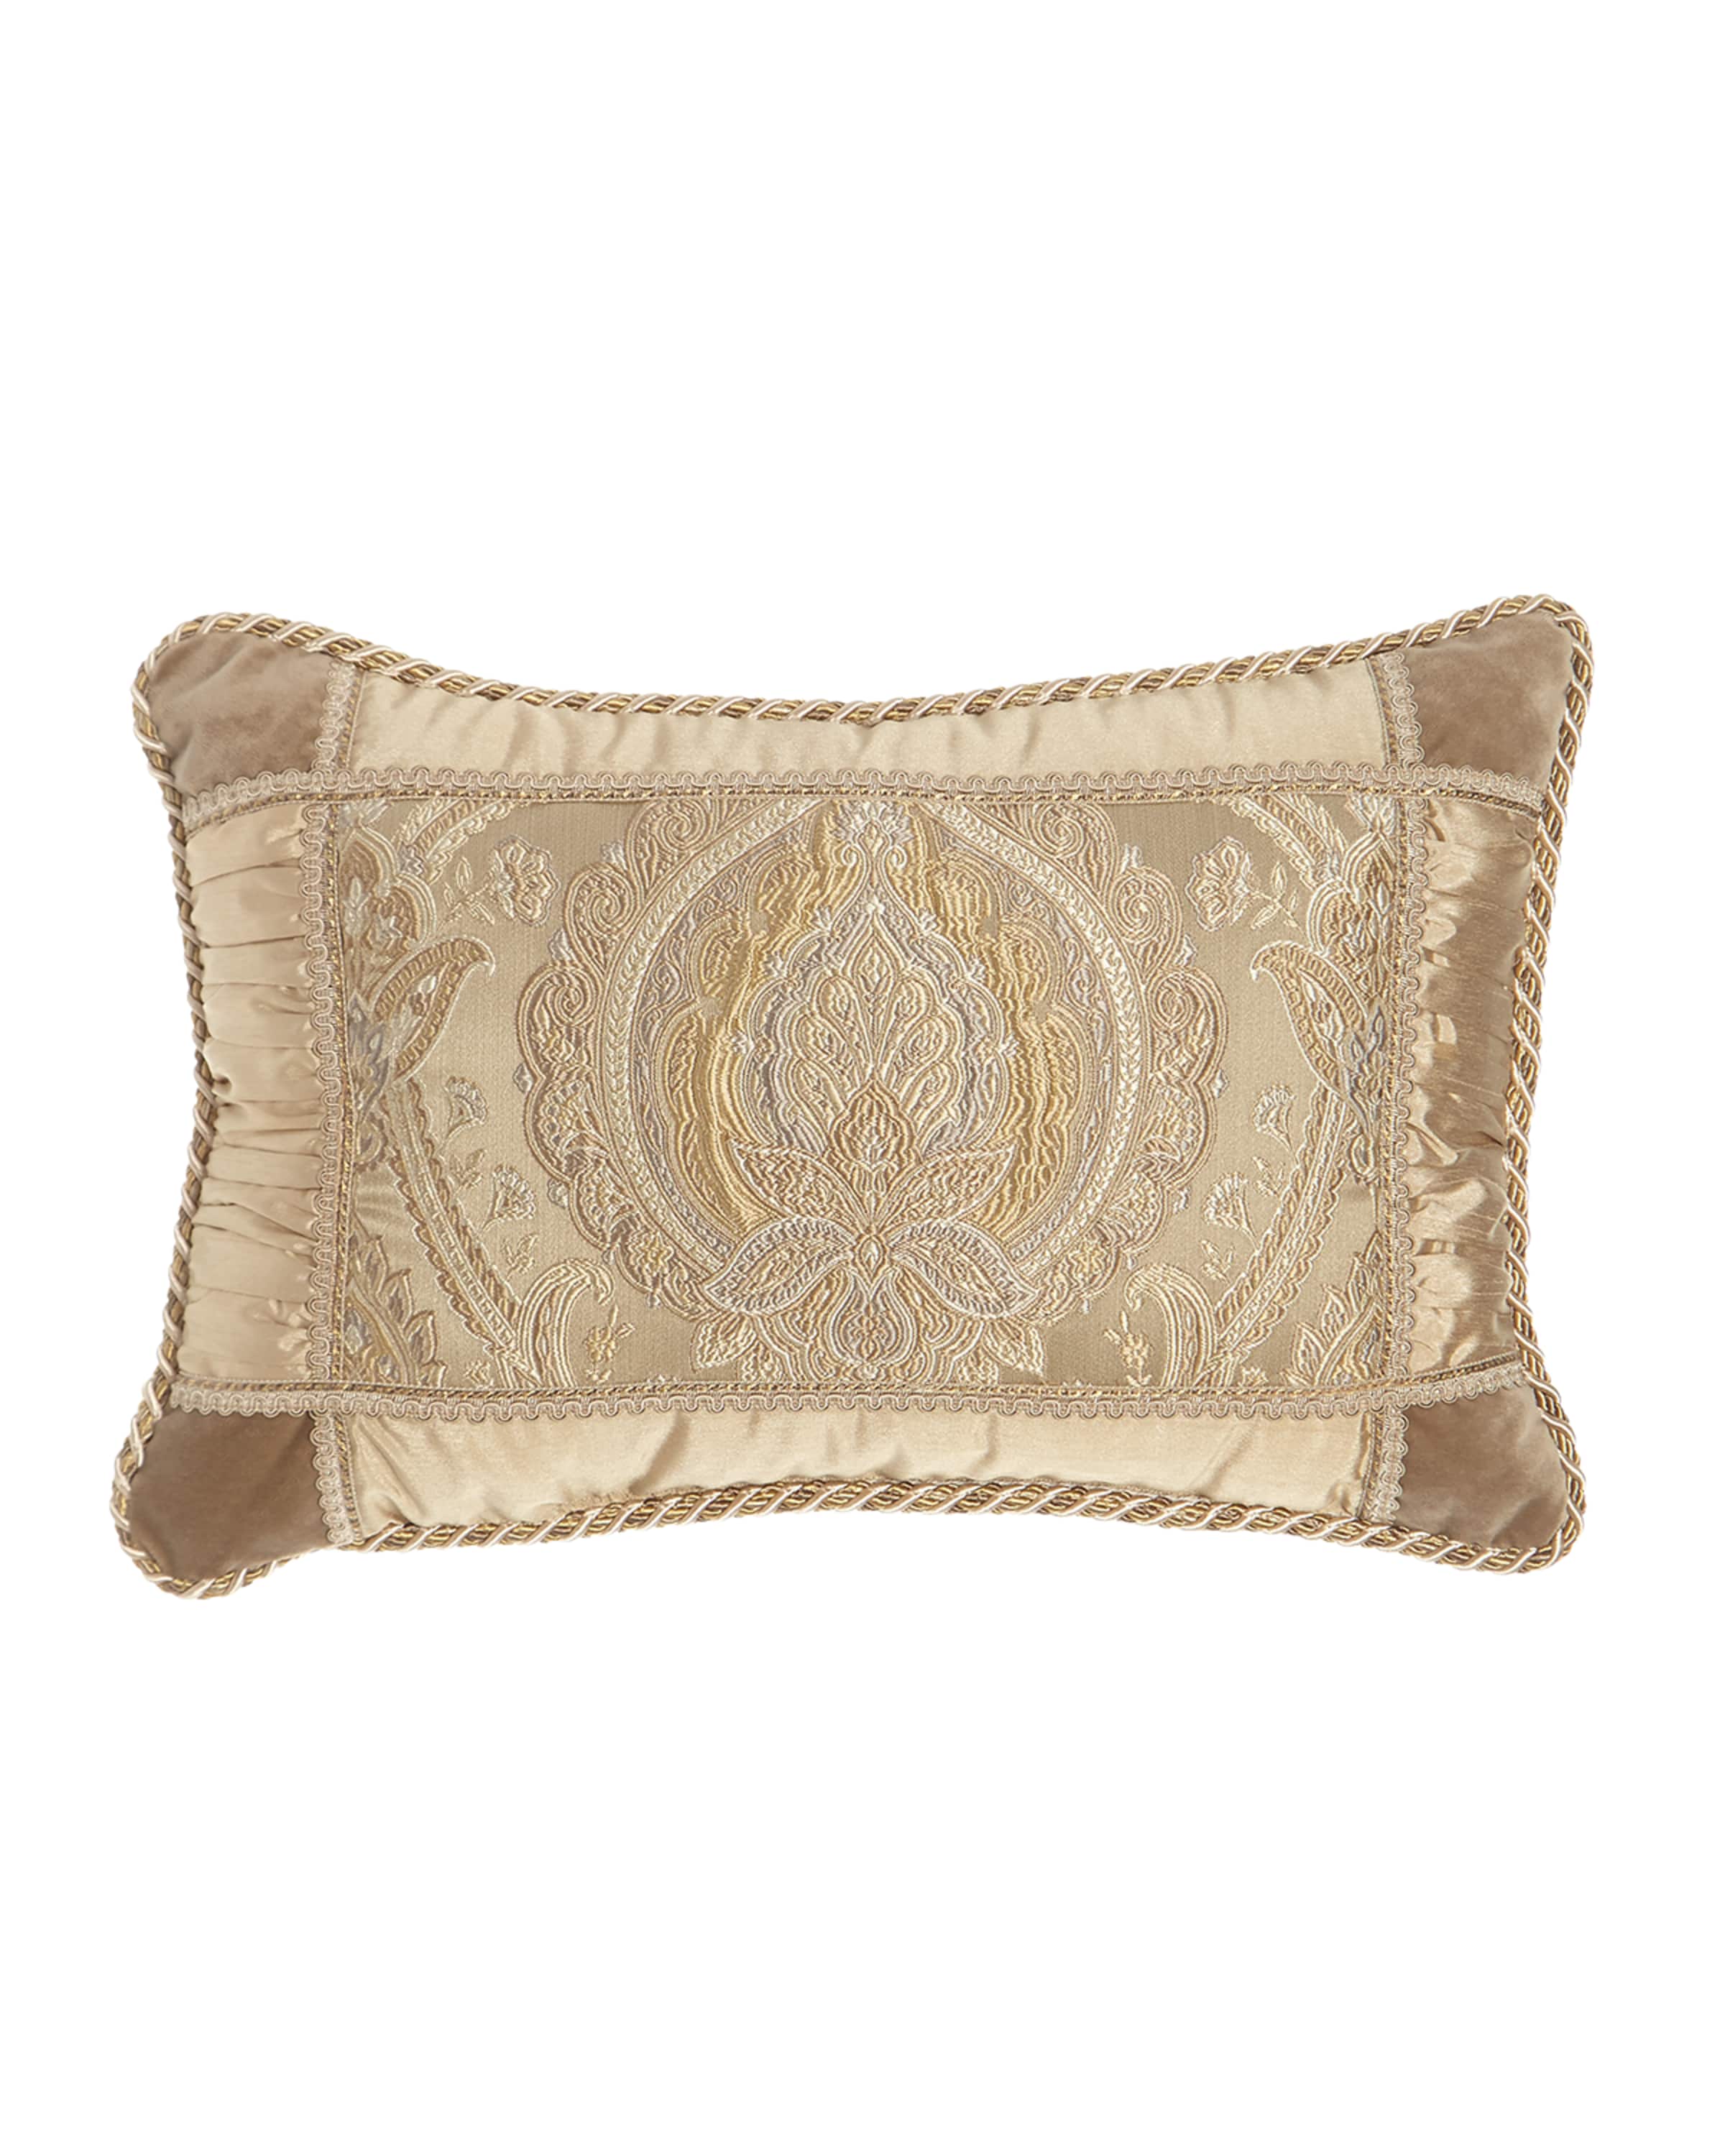 Austin Horn Collection Renaissance Boudoir Pillow, 14" x 20"